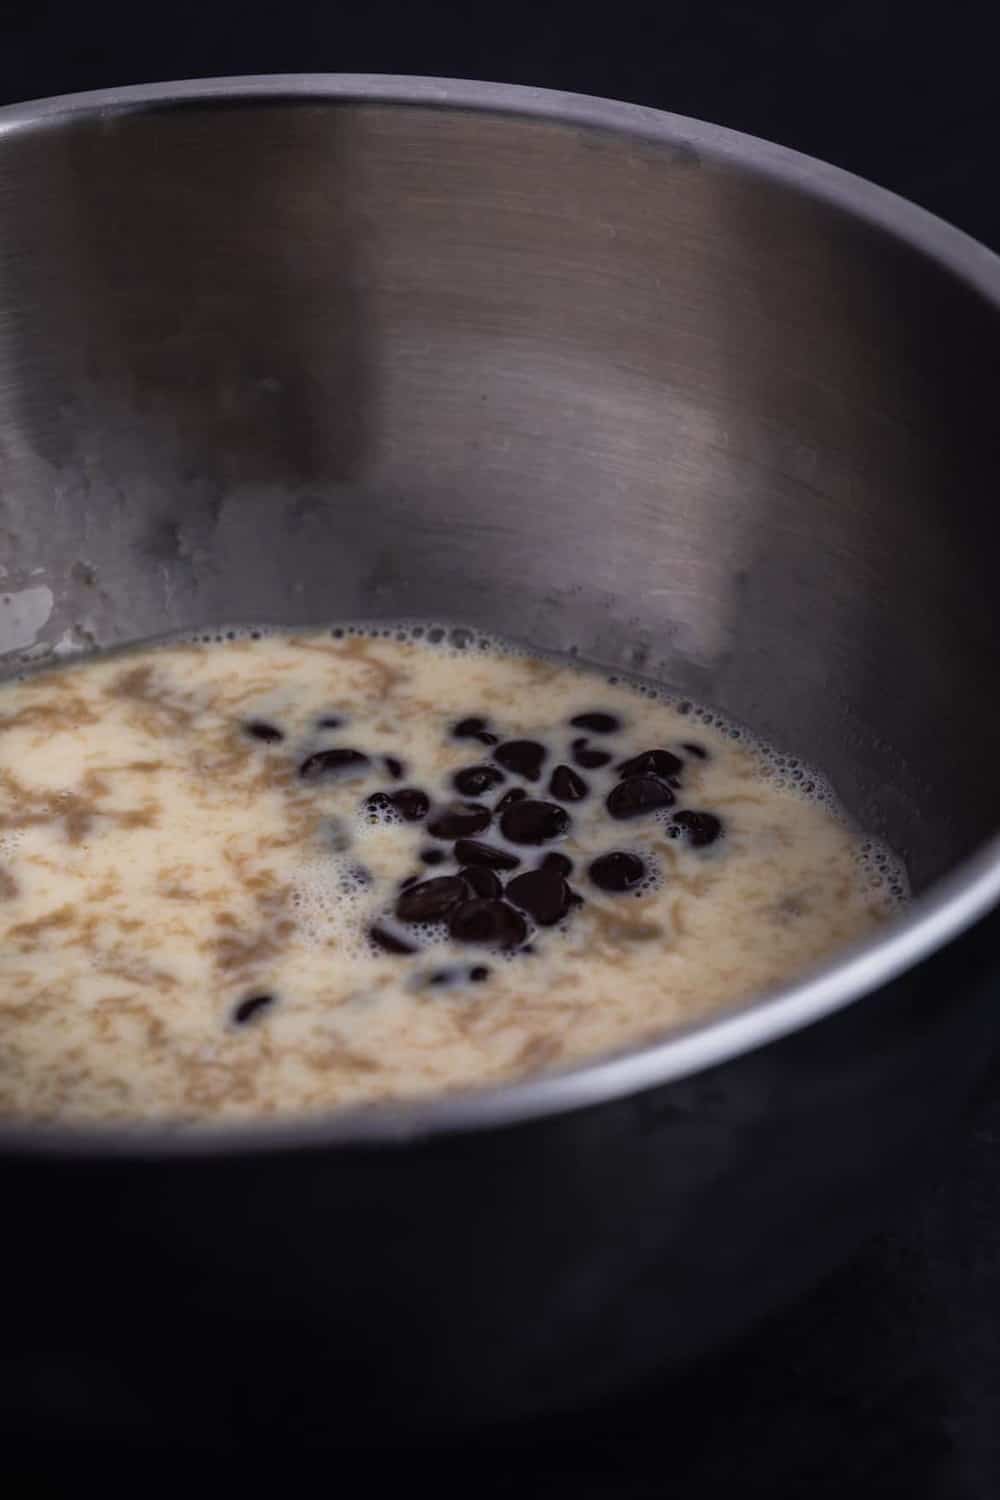 Cream mixture is poured into chocolate tahini bowl.